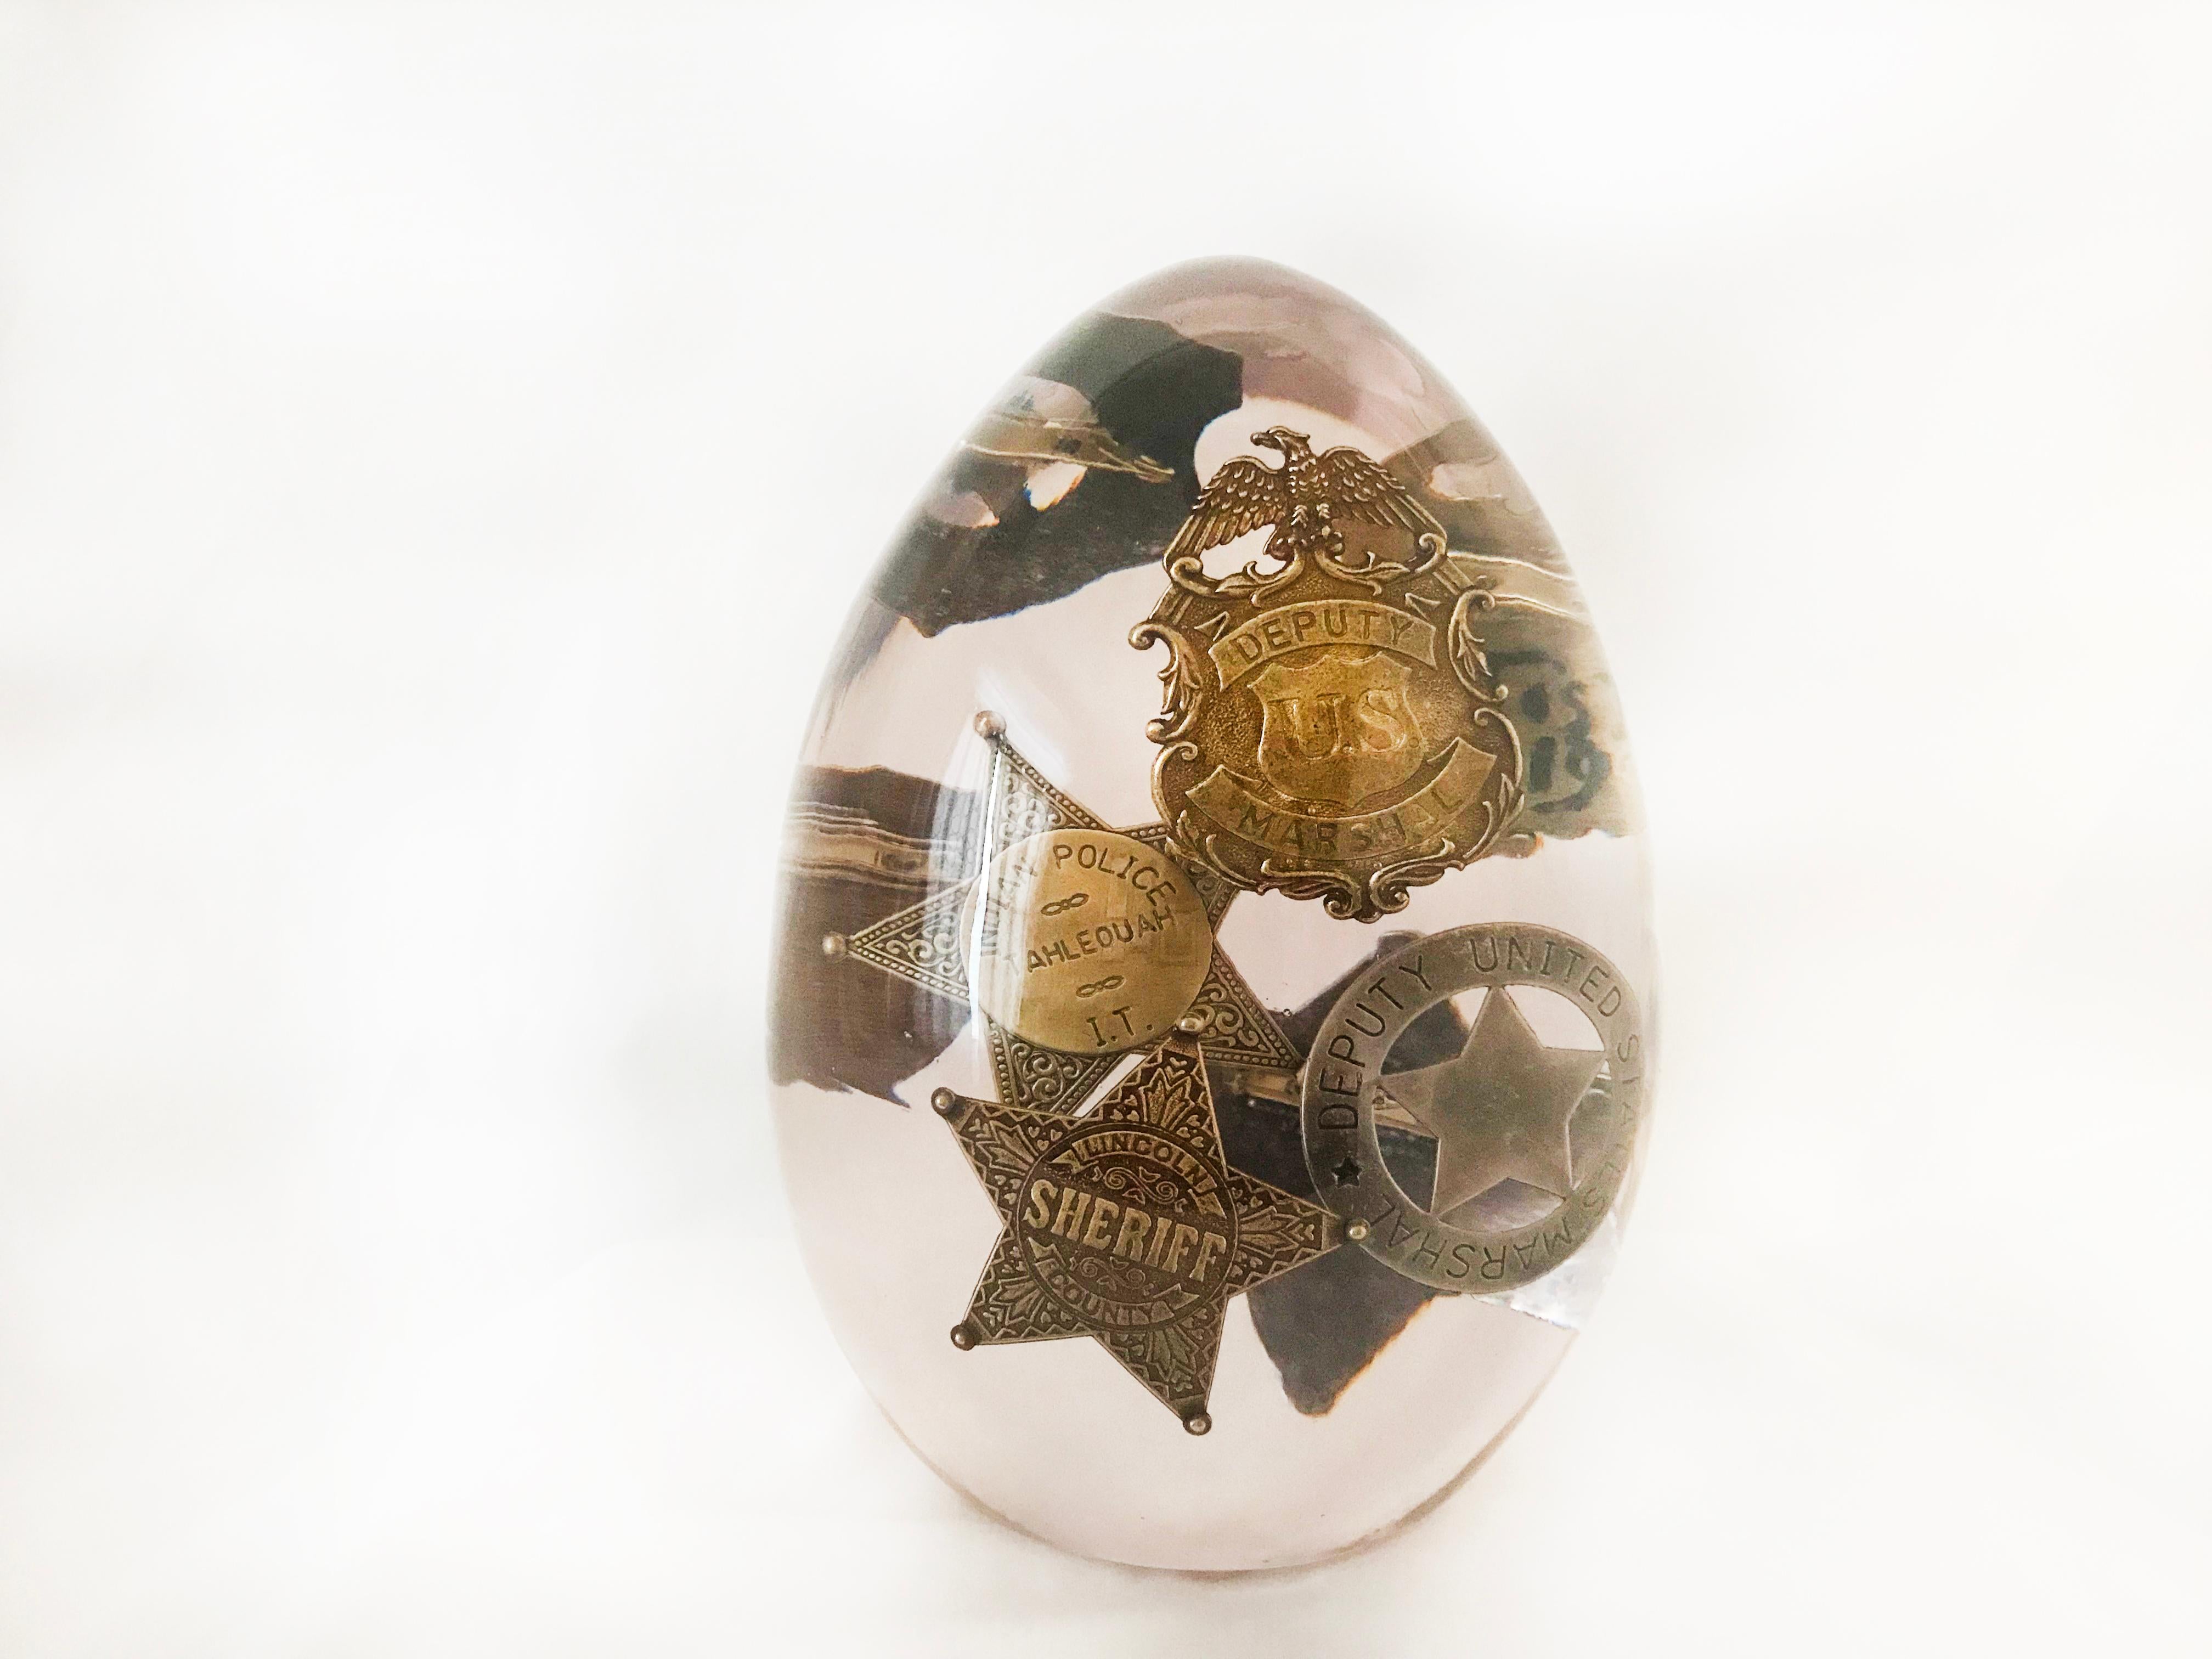 Helder Batista Still-Life Sculpture - Egg Series - Sheriff, Deputy Marshal, and Police Badges